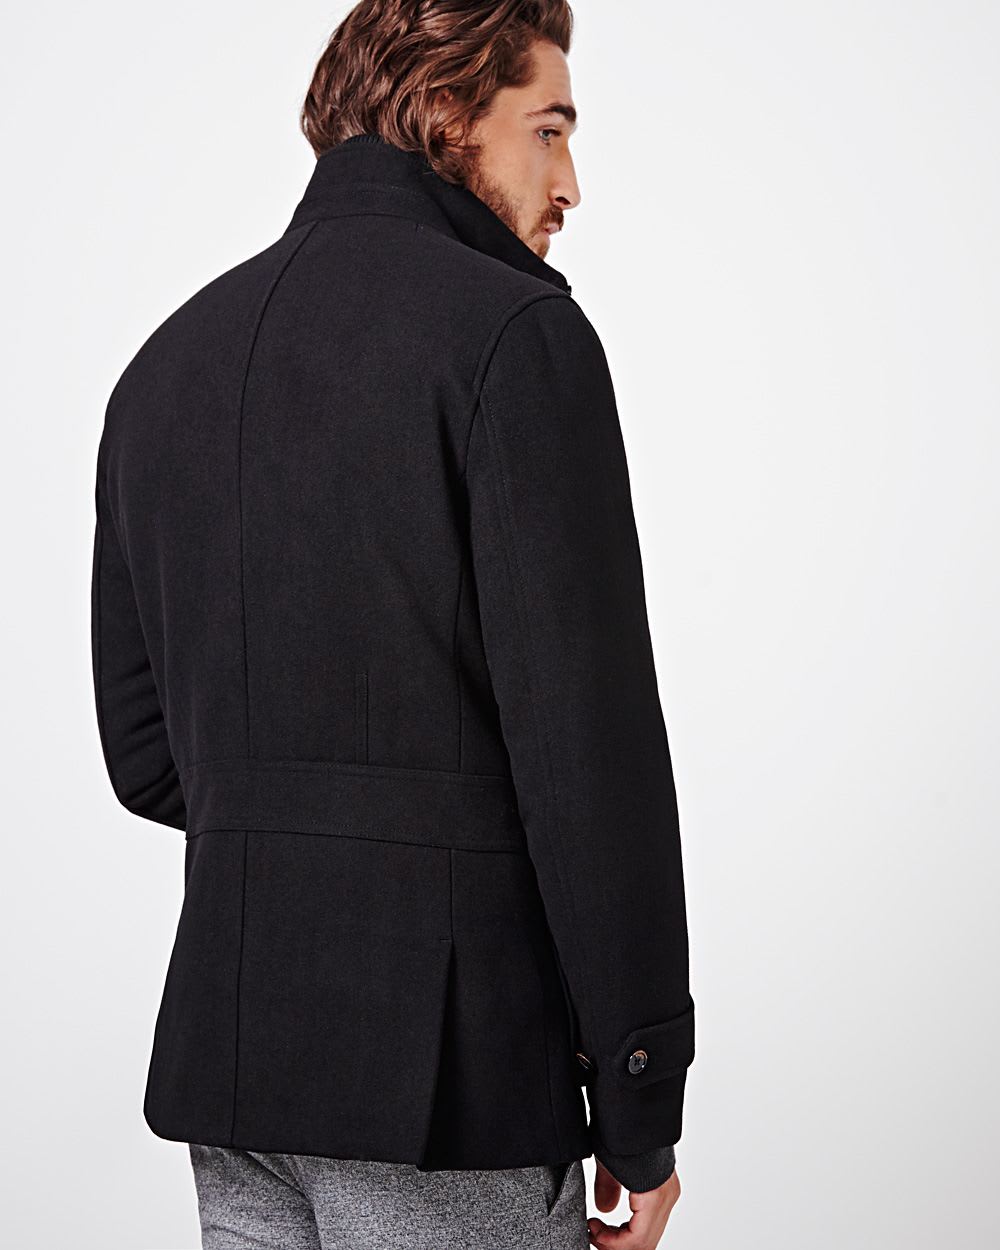 Essential wool-blend jacket | RW&CO.